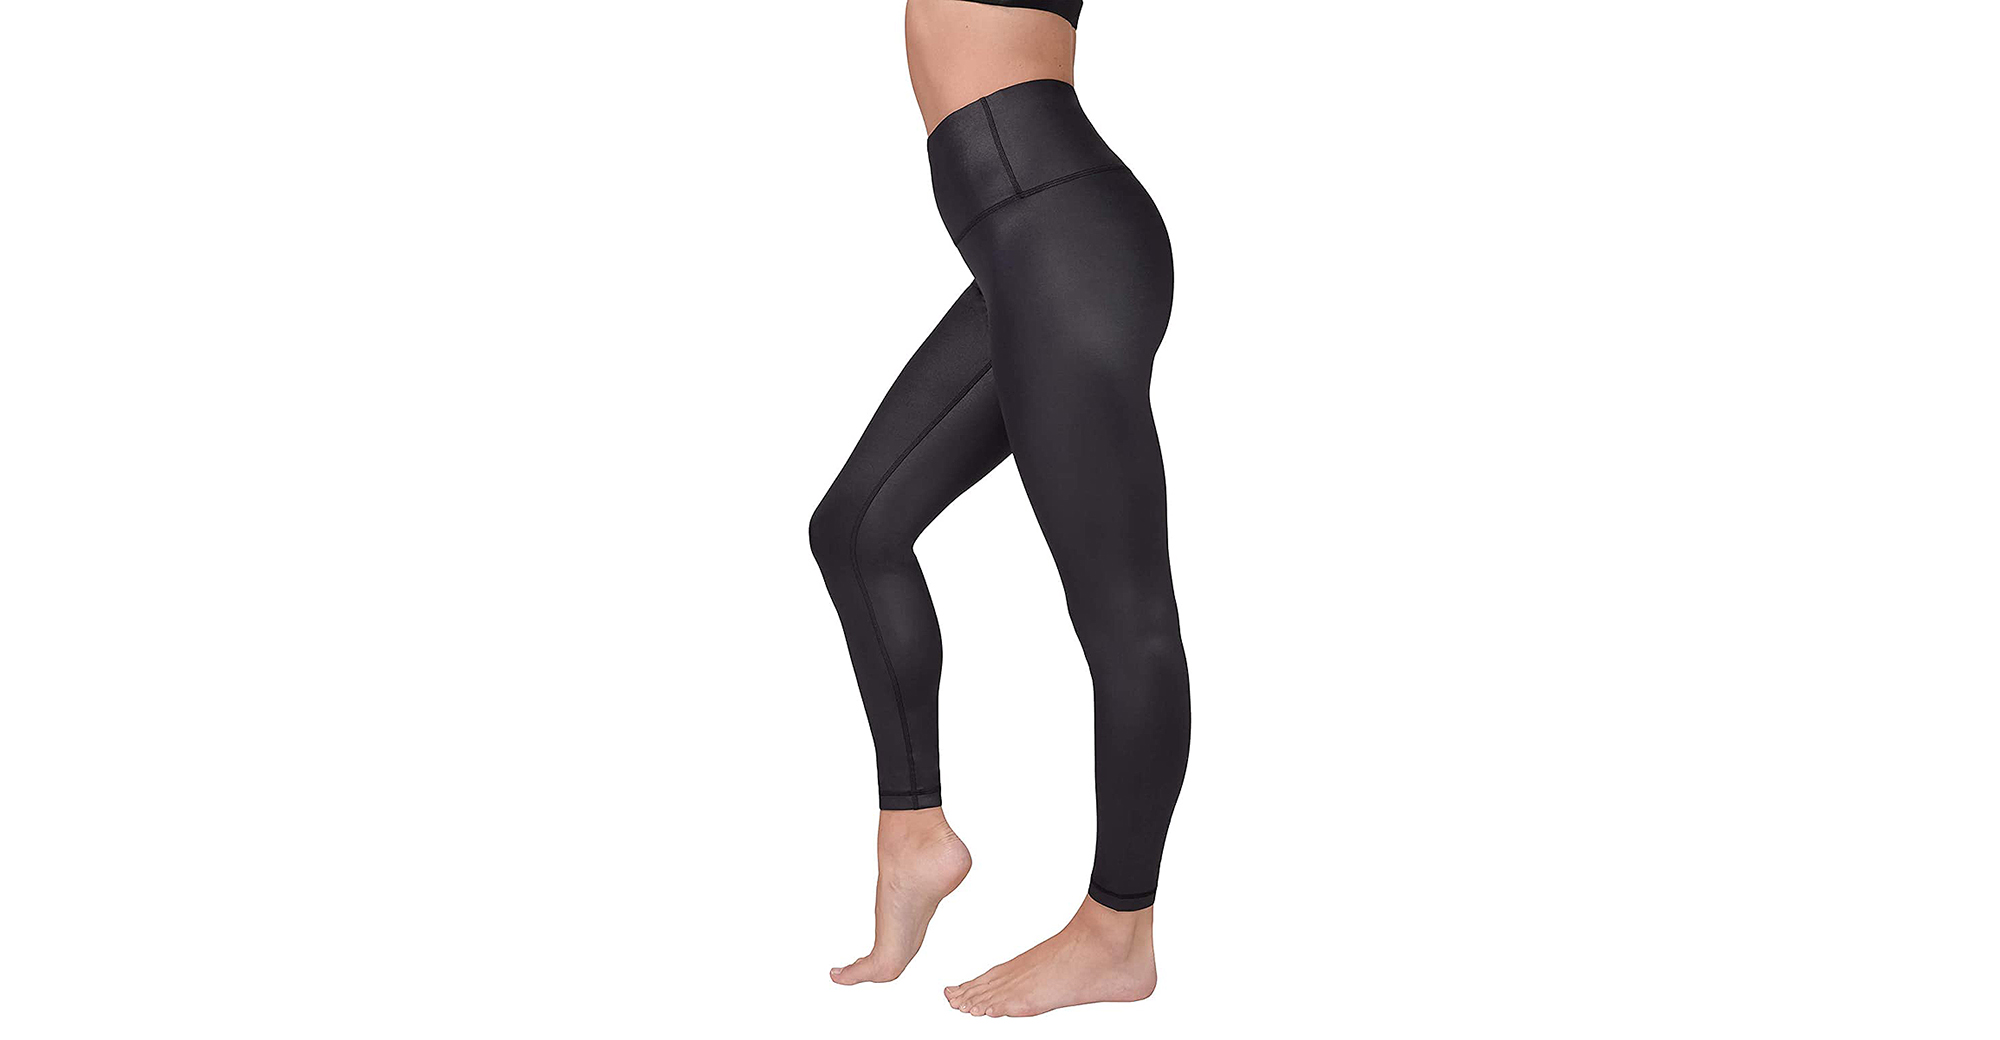 https://www.usmagazine.com/wp-content/uploads/2021/02/90-degree-by-reflex-leggings-side.jpg?quality=86&strip=all